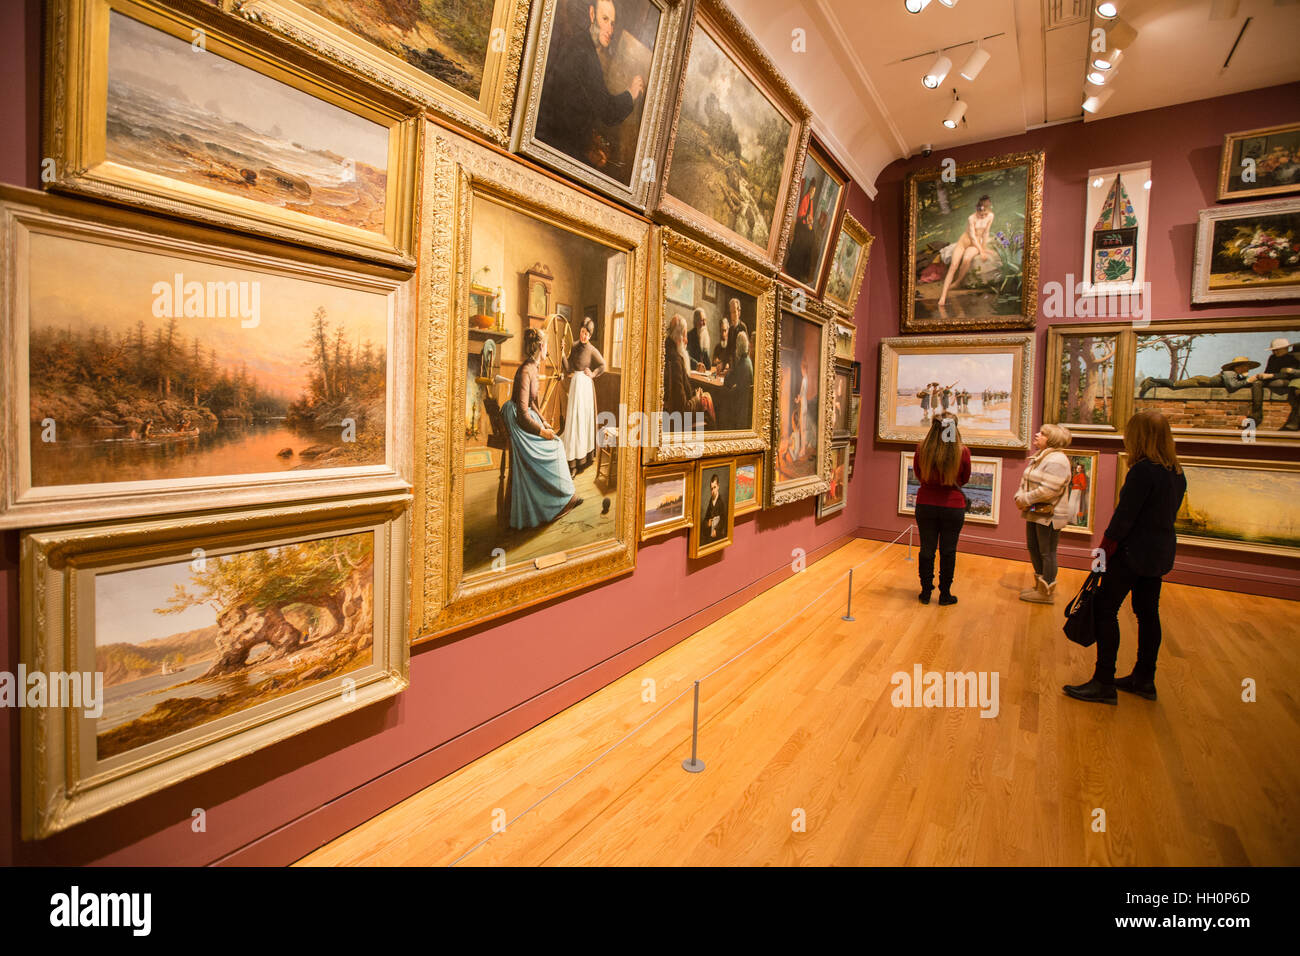 art gallery interior paintings female visitors Stock Photo